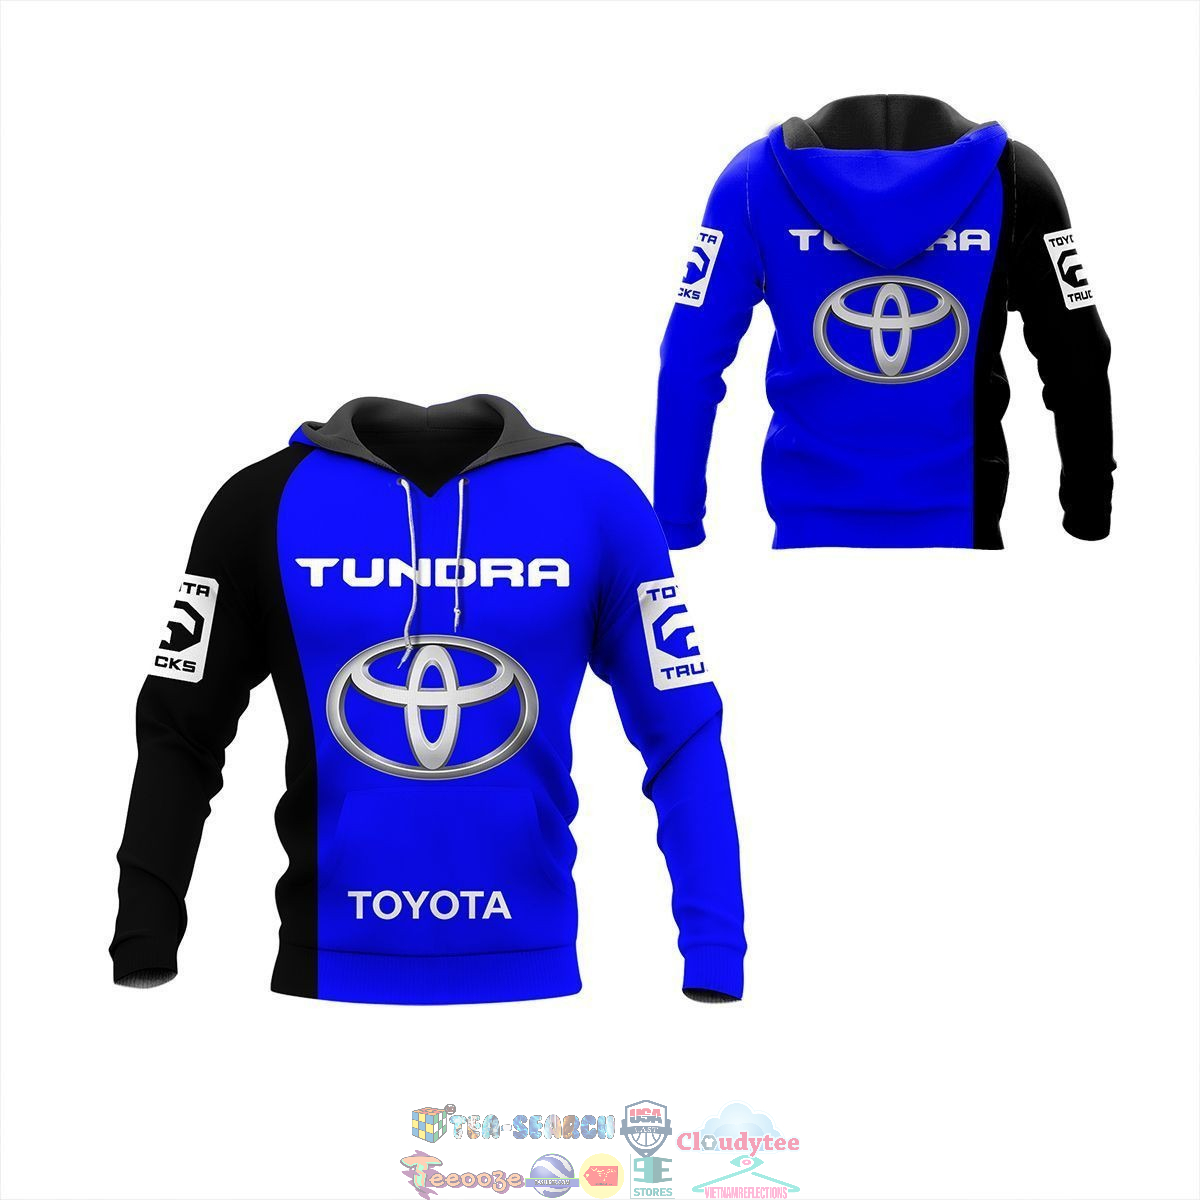 ucUOcwDE-TH030822-26xxxToyota-Tundra-ver-12-3D-hoodie-and-t-shirt3.jpg